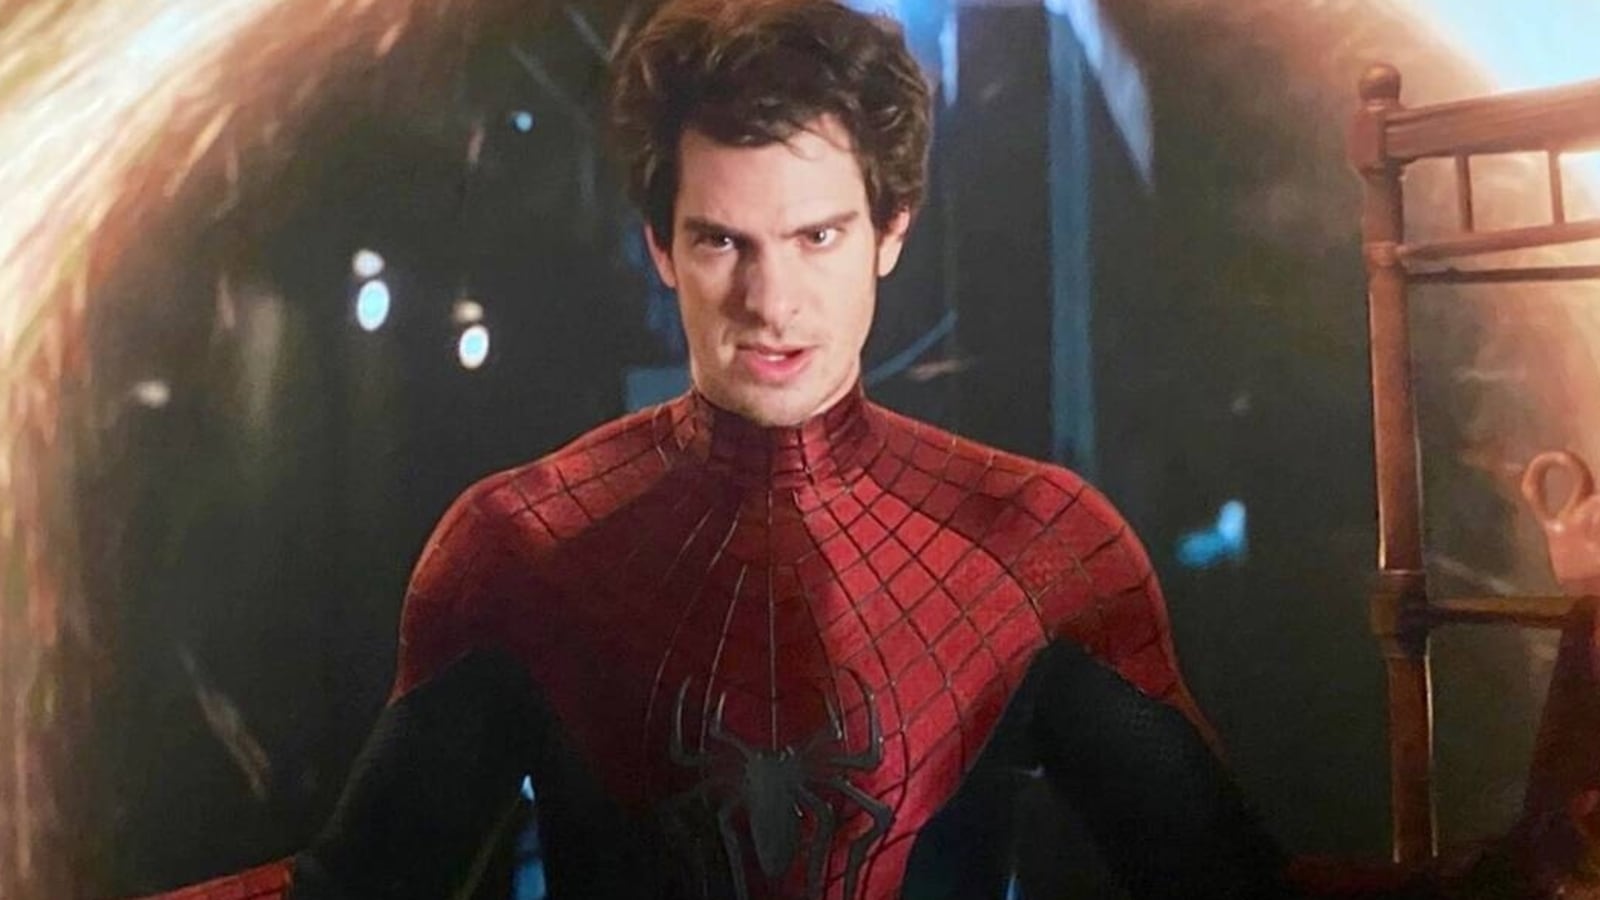 Andrew Garfield's Spider-Man 